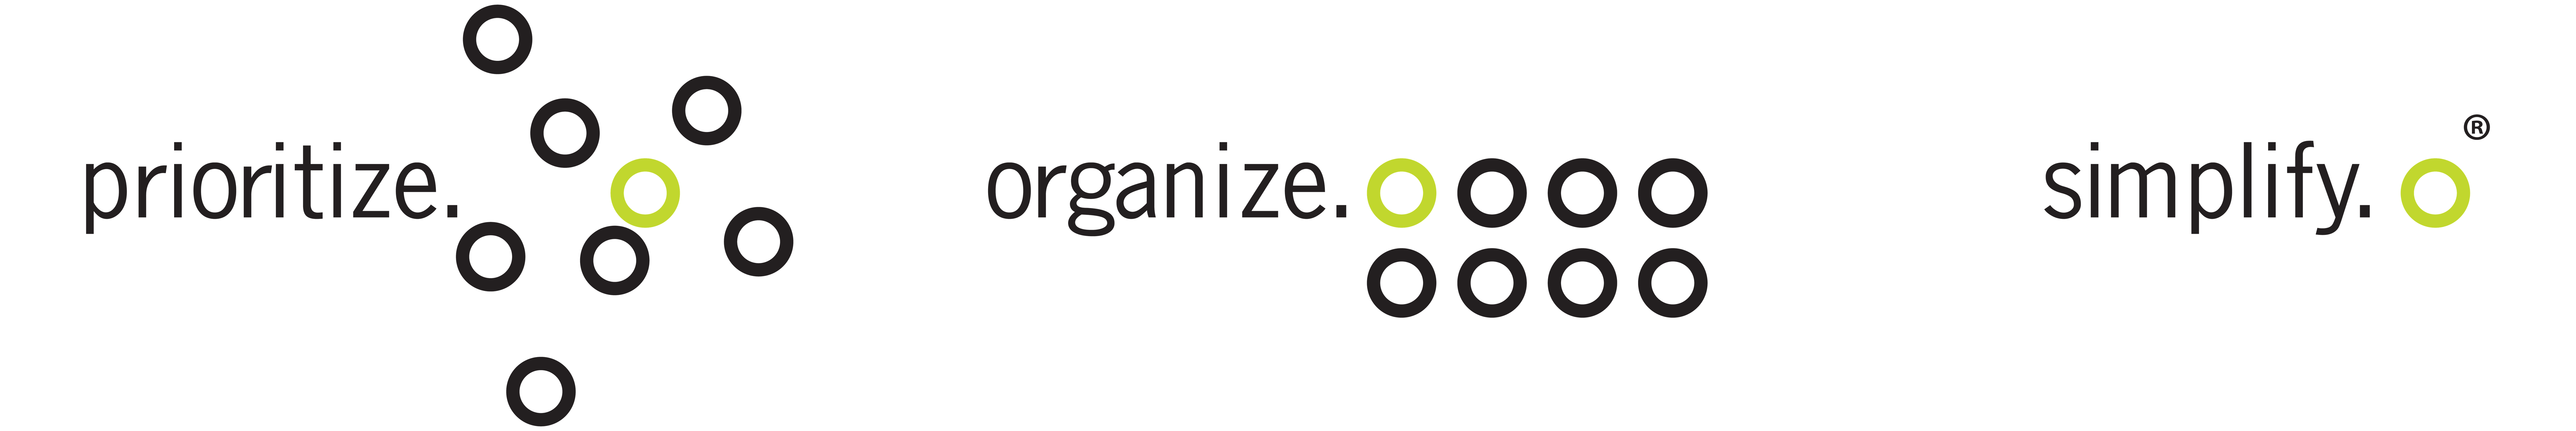 Prioritize Organize Simplify FULL High Res POS Logos 2